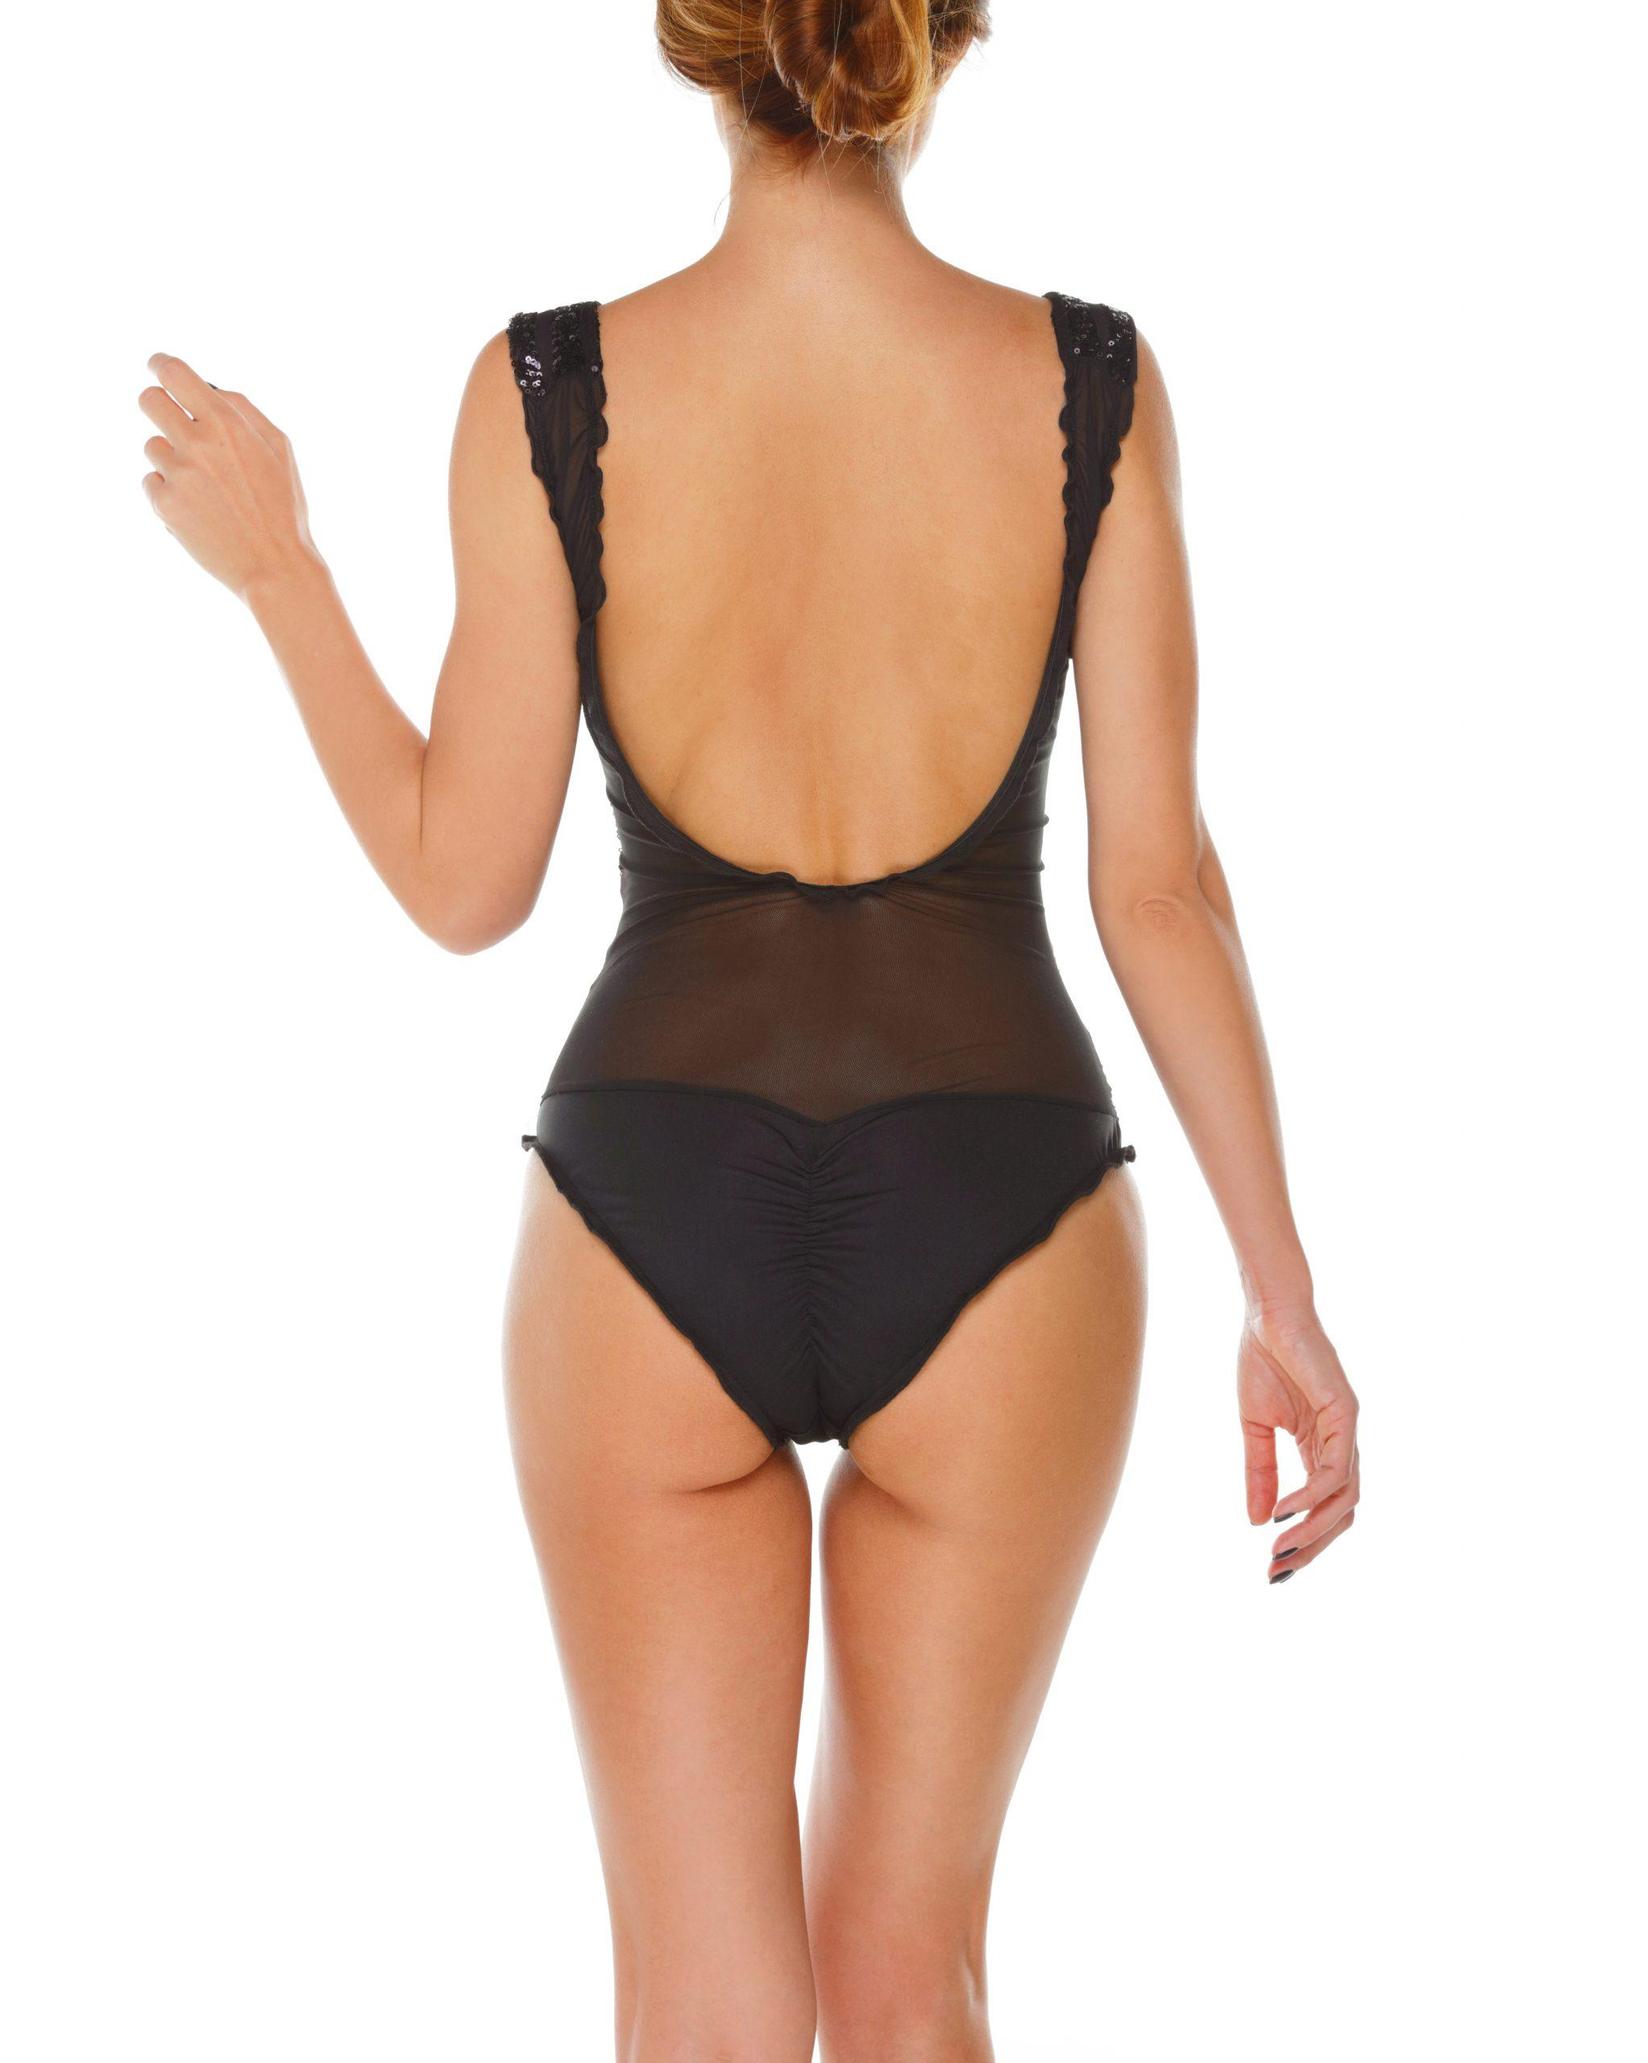 Selected image for MAROCCO COLLECTION Ženski jednodelni kupaći kostim crni